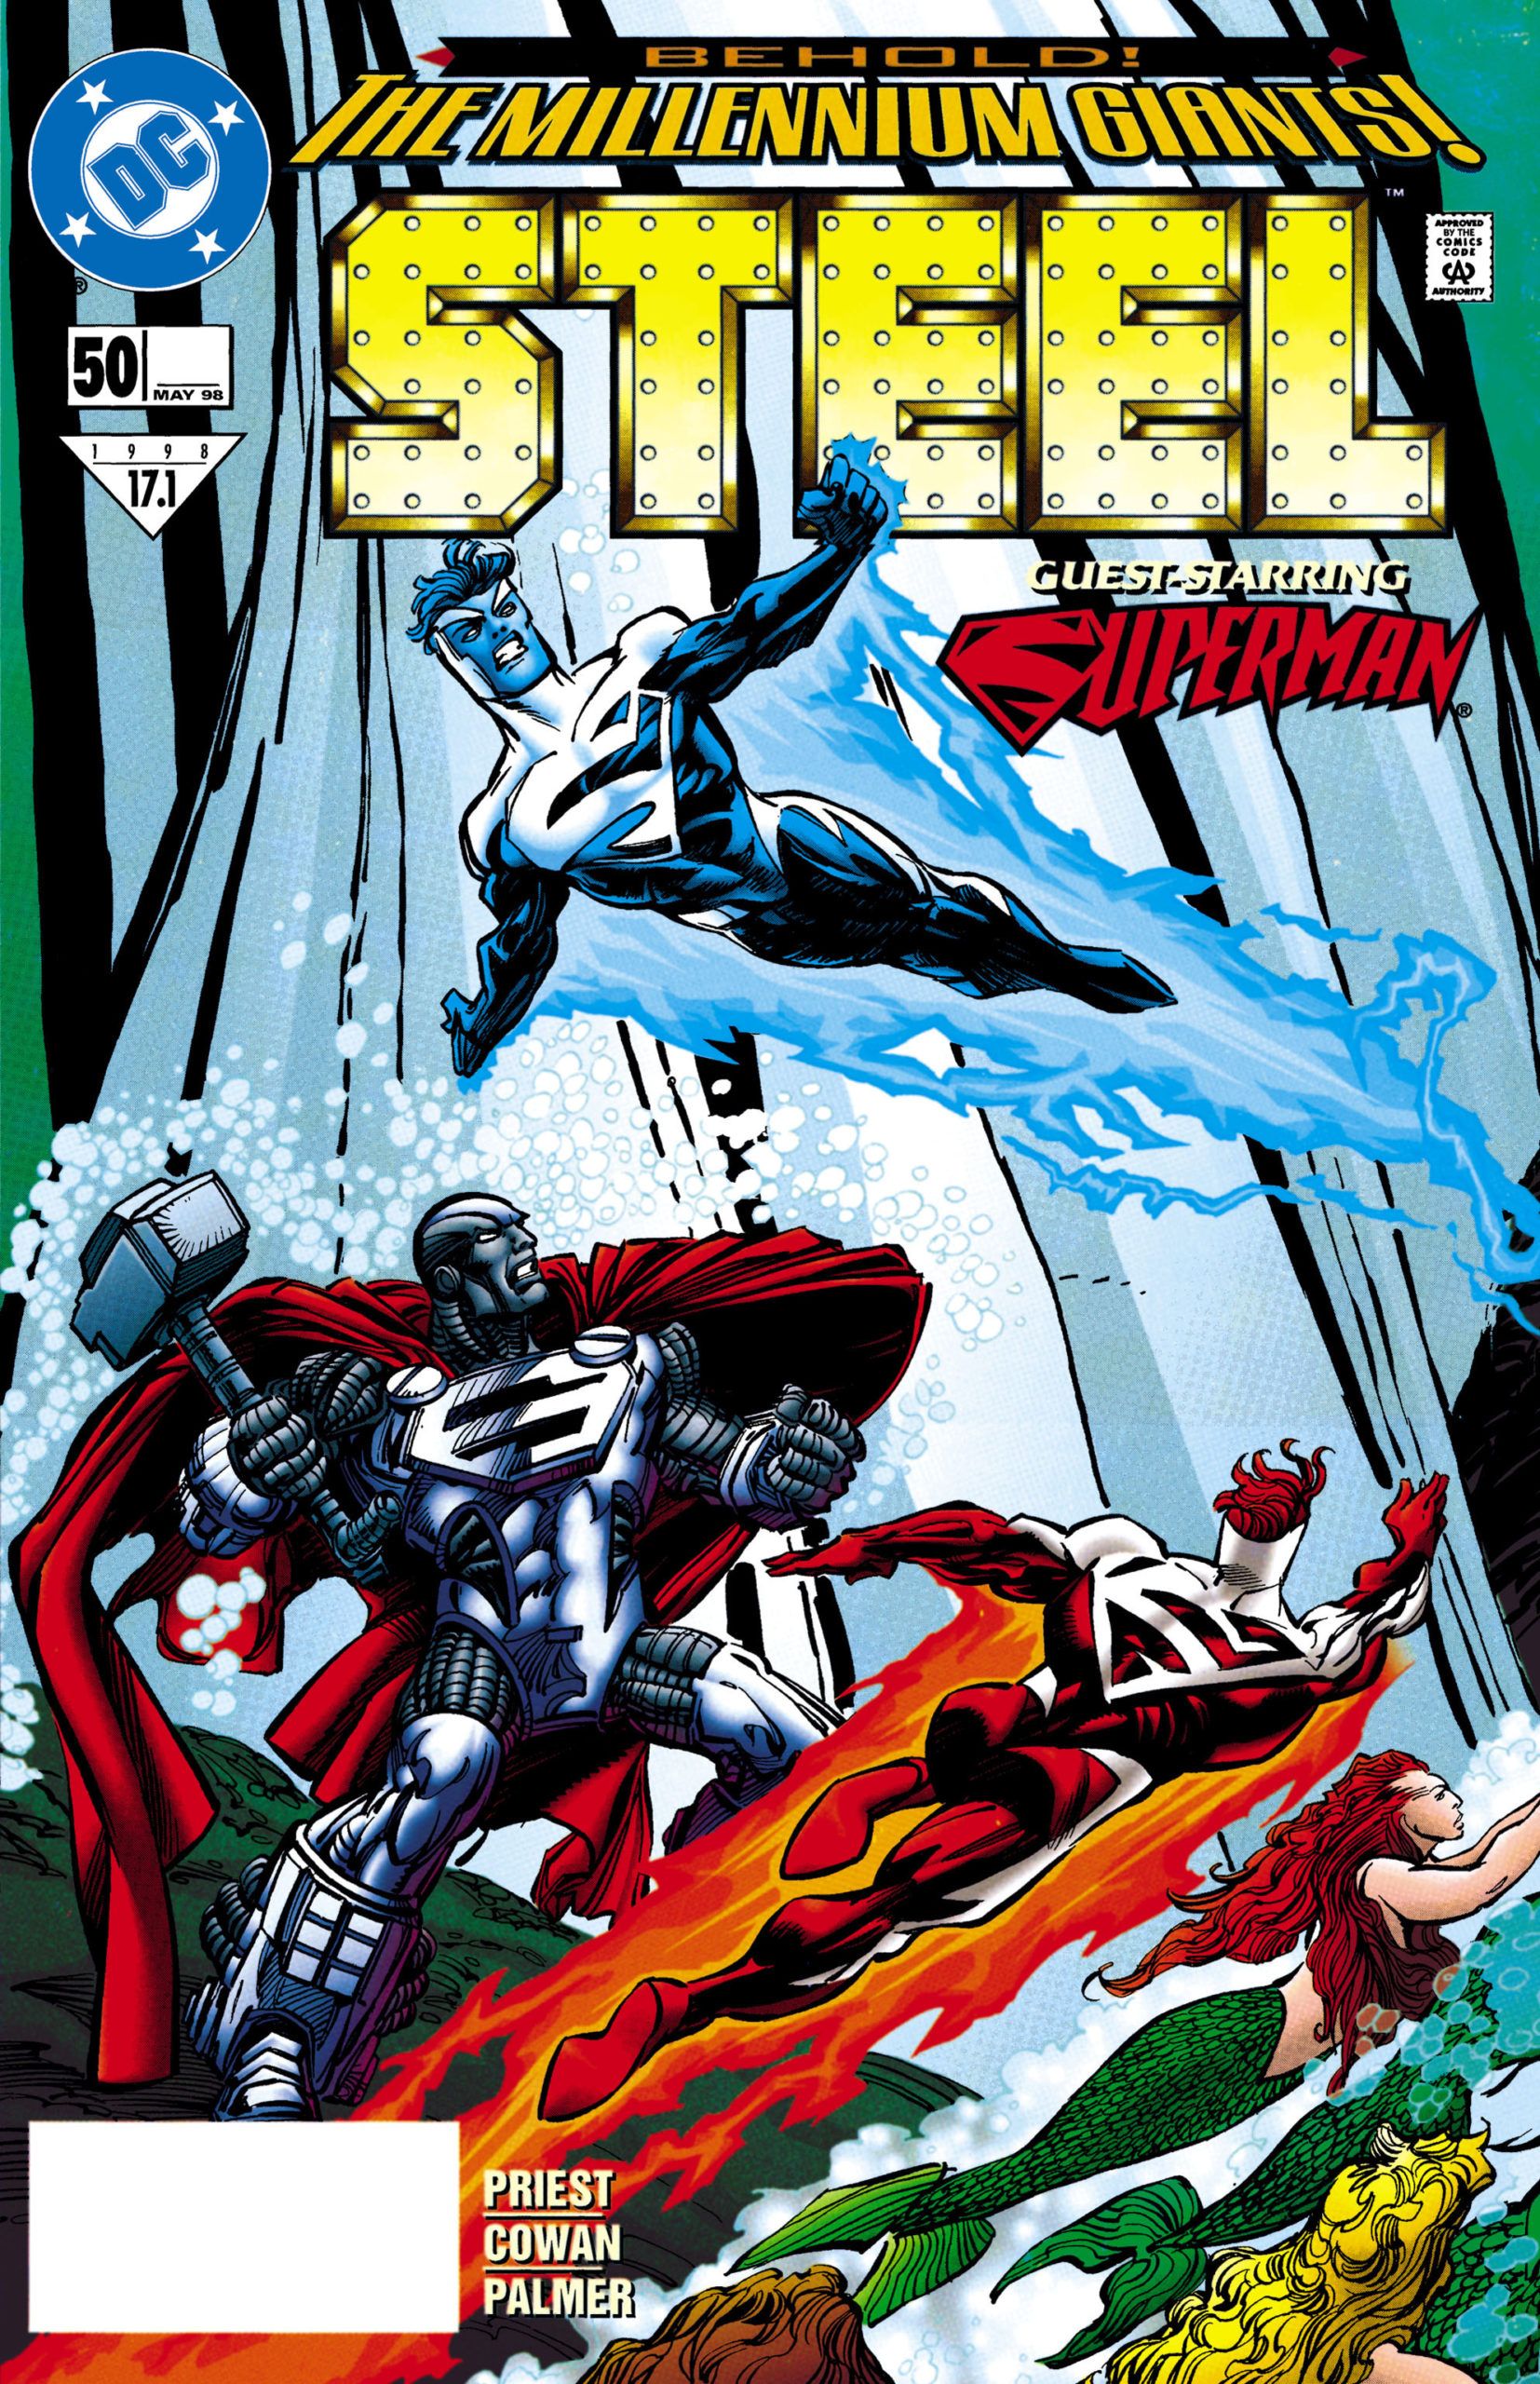 Steel #50 - Among Giants released by DC Comics on May 1, 1998.